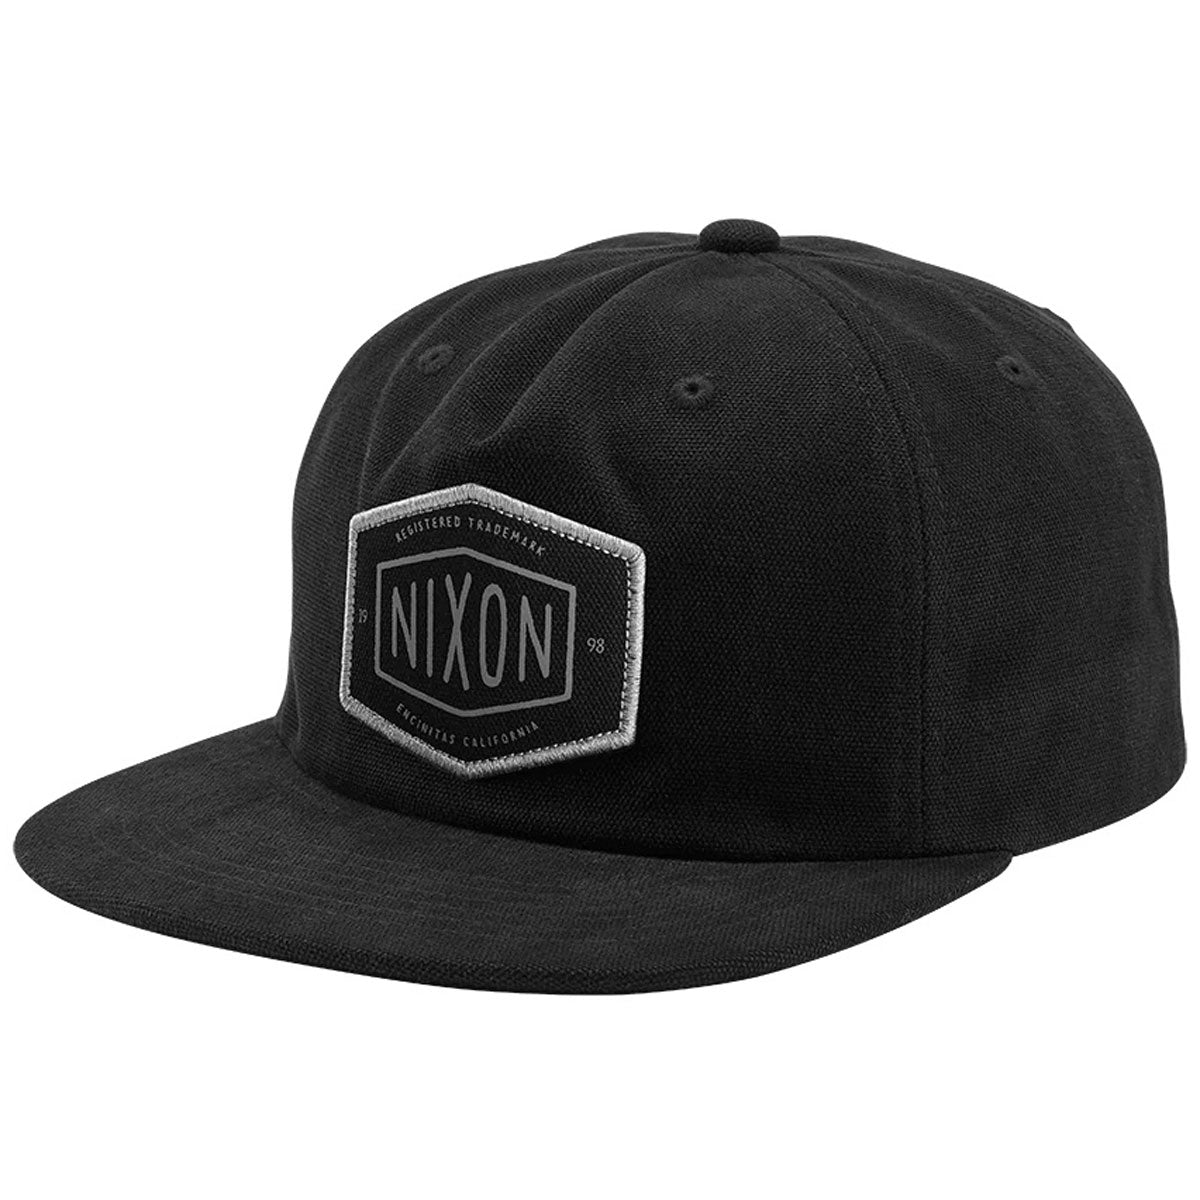 Nixon Anderson Strapback Hat - Black image 1